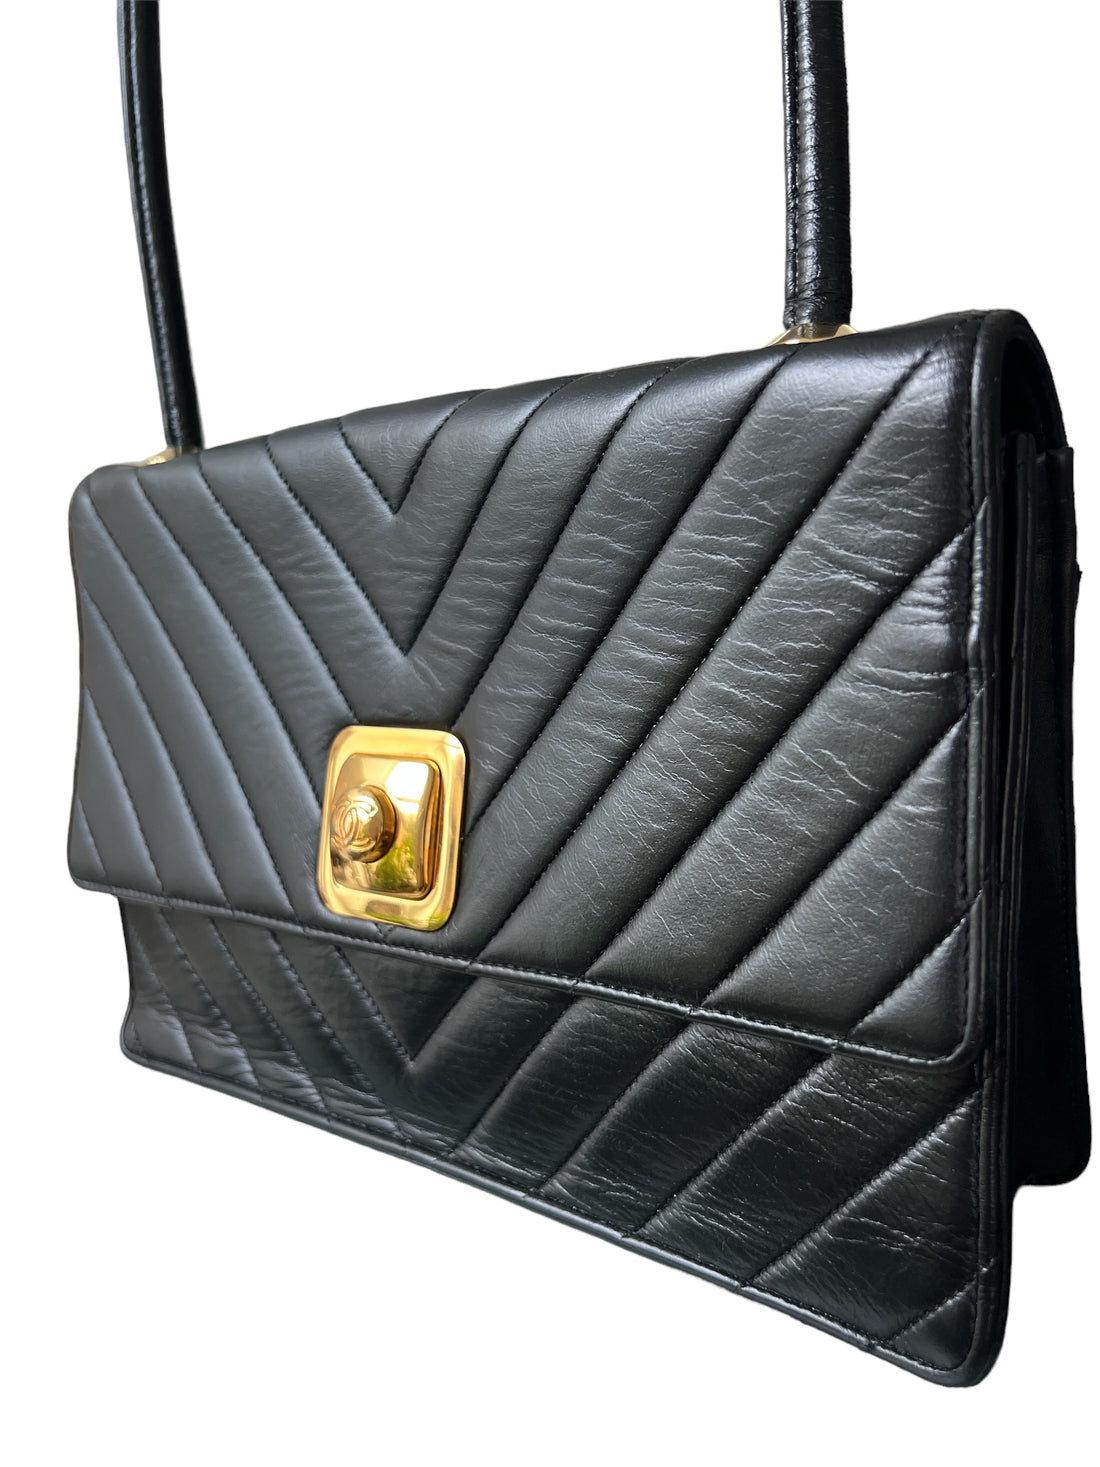 Chanel Flap Bag Schultertasche